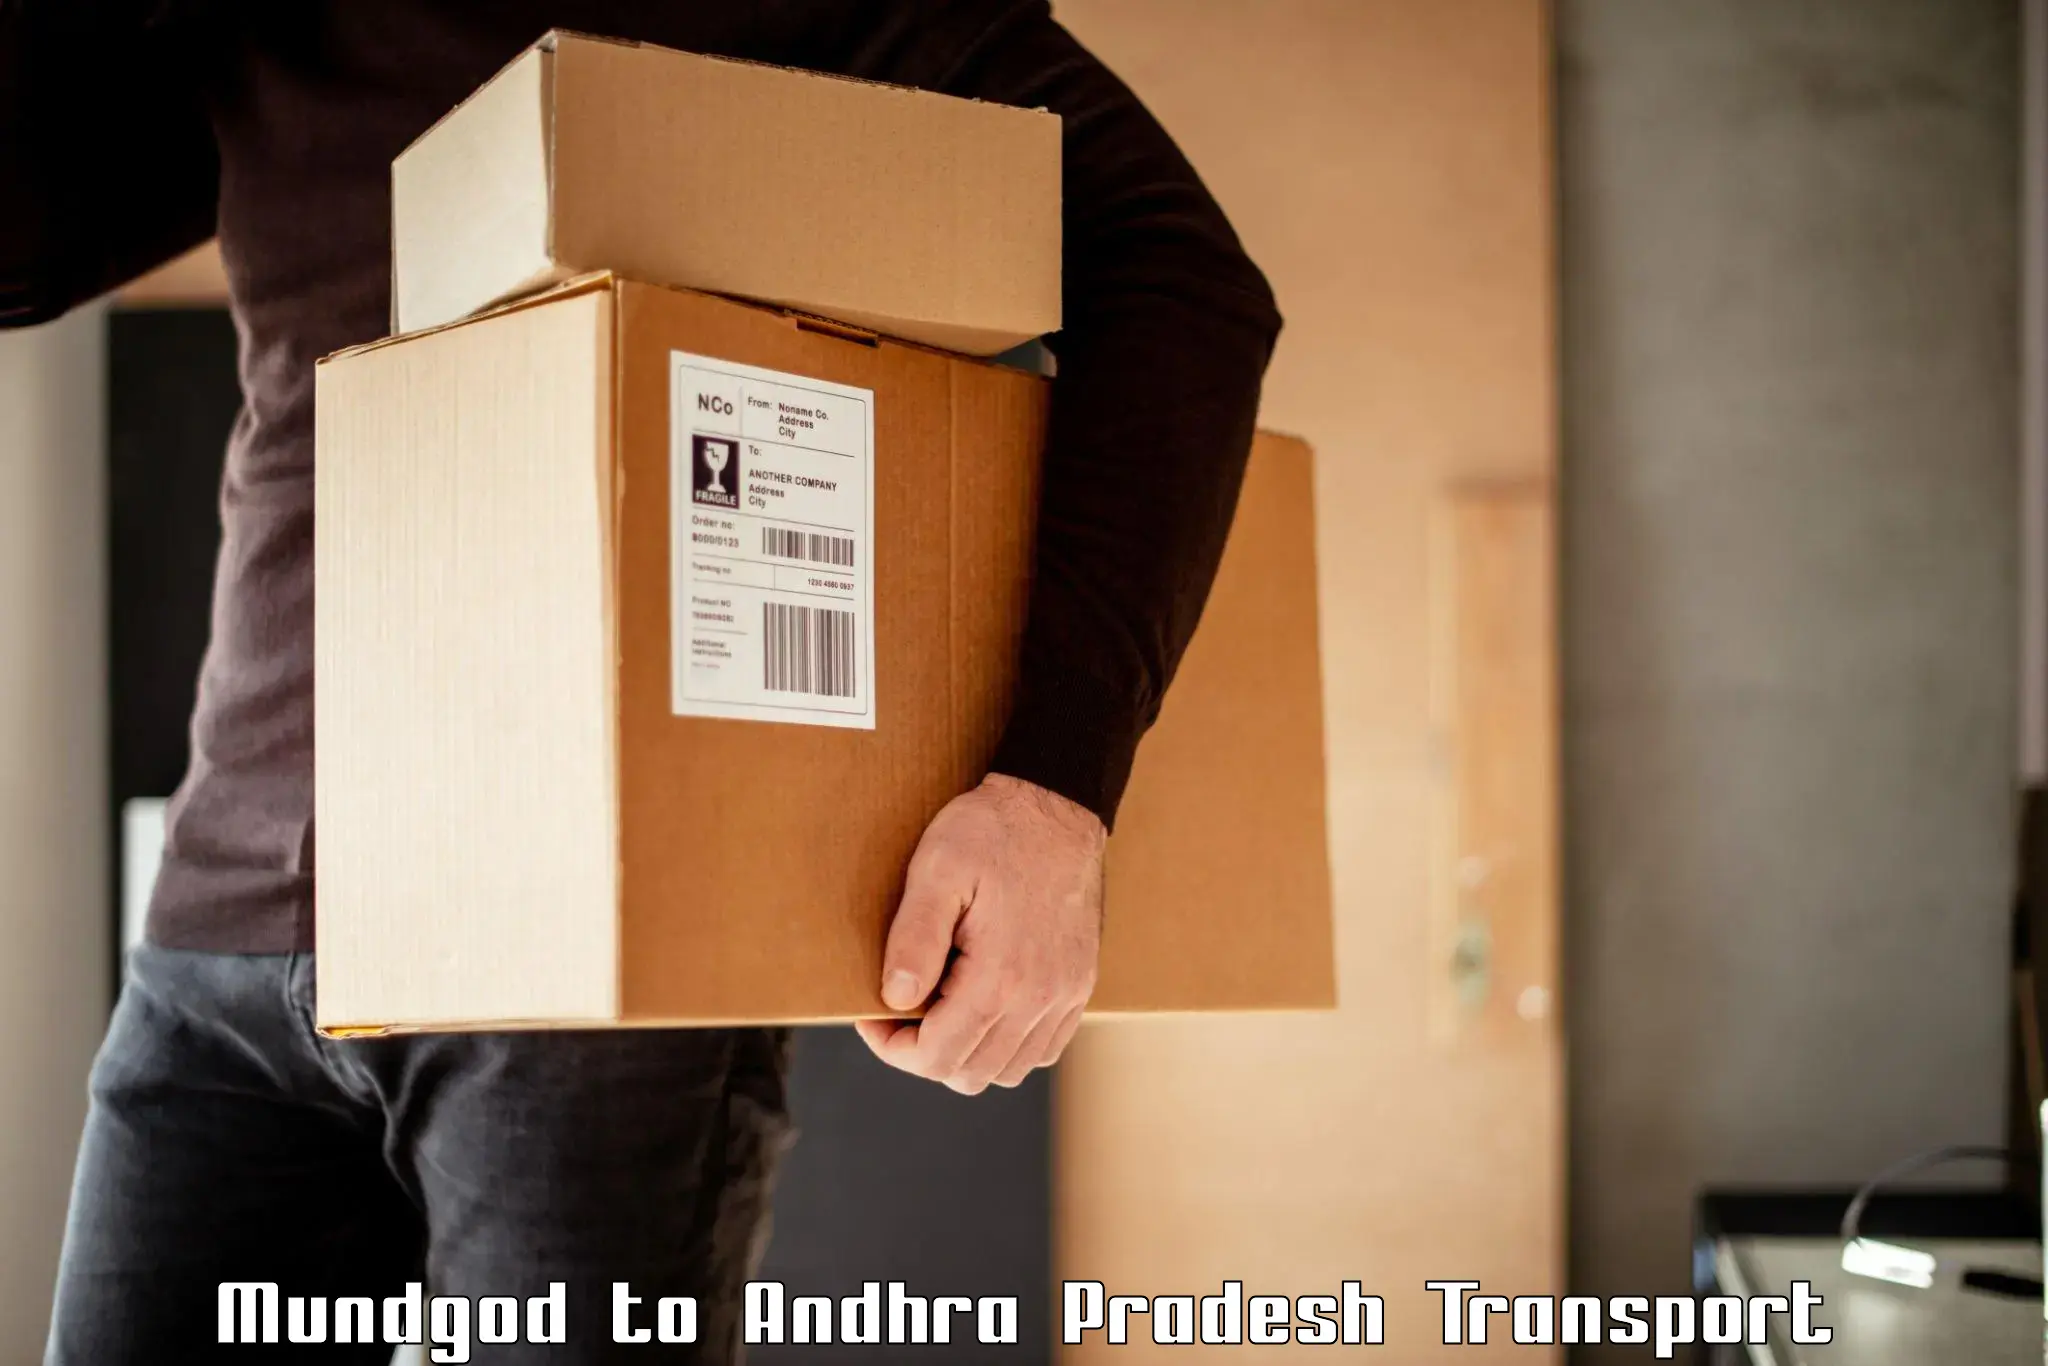 Shipping partner Mundgod to Chittoor